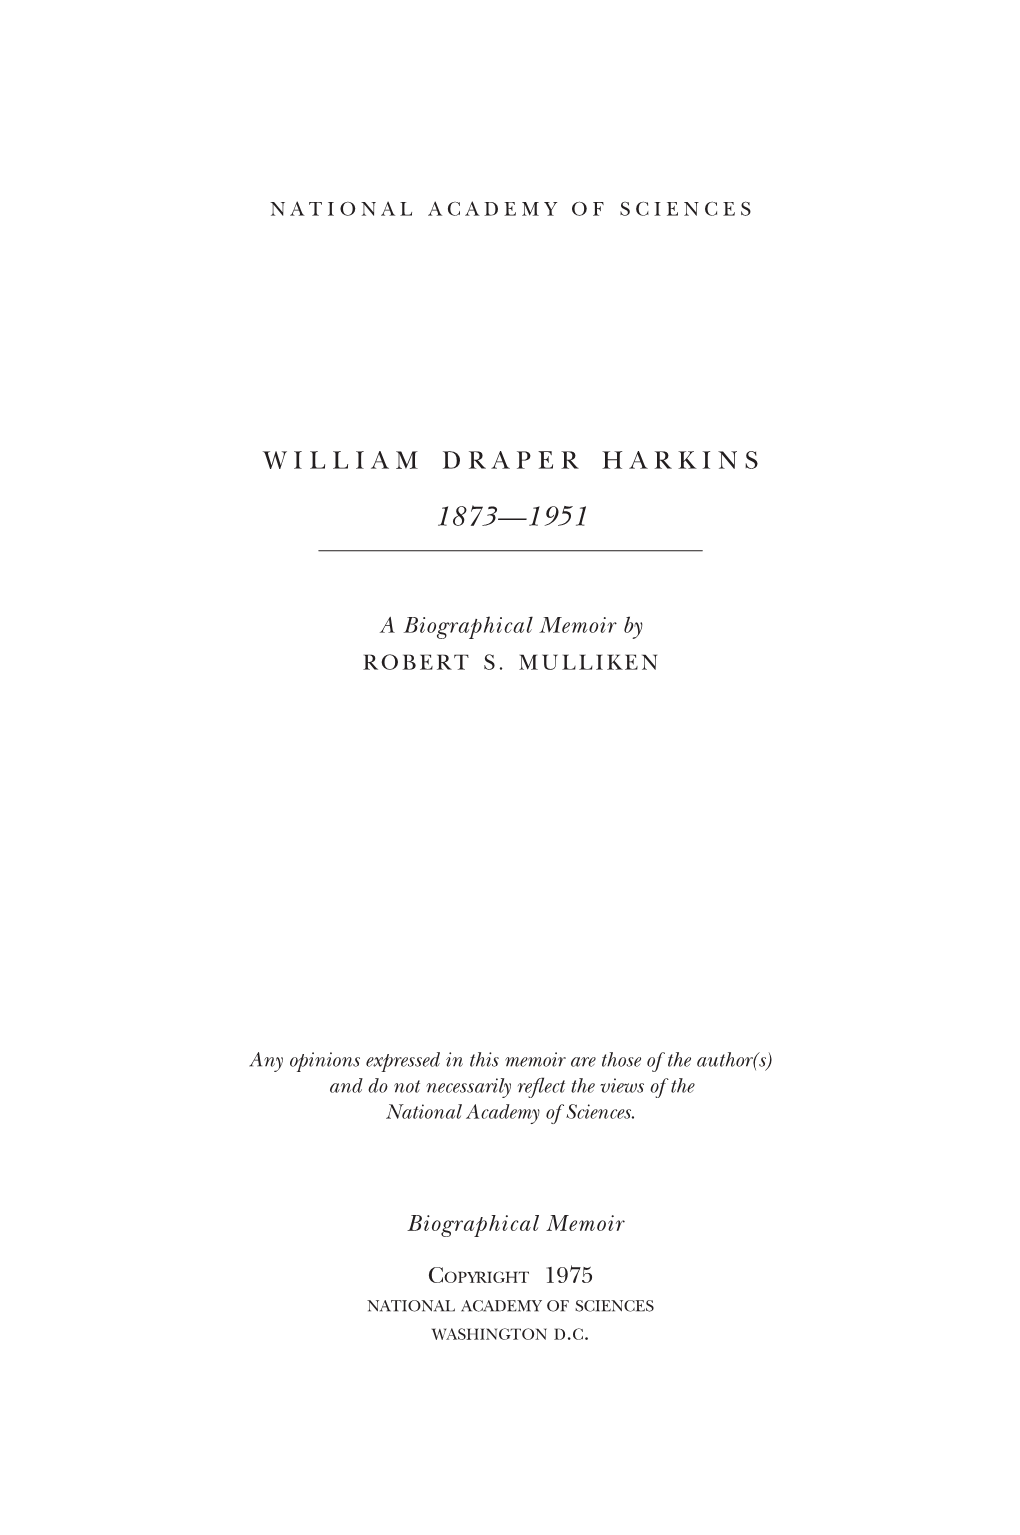 William Draper Harkins